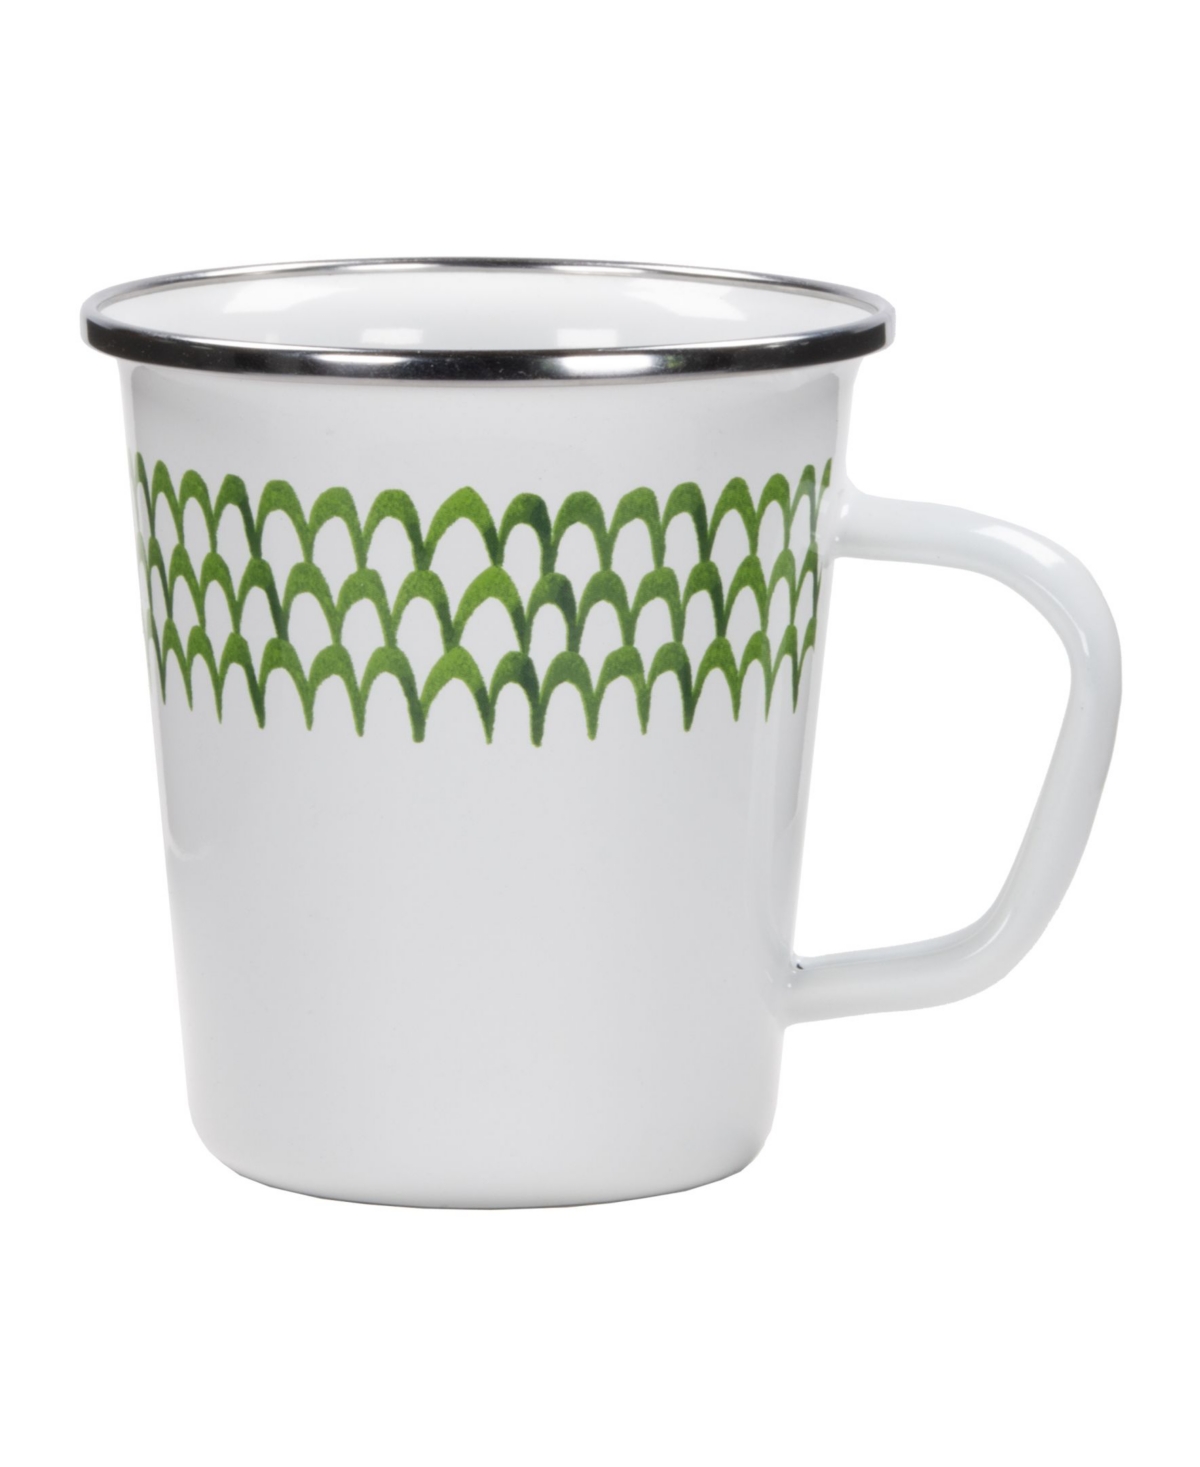 Scallop Enamelware Latte Mugs, Set of 4 - Green